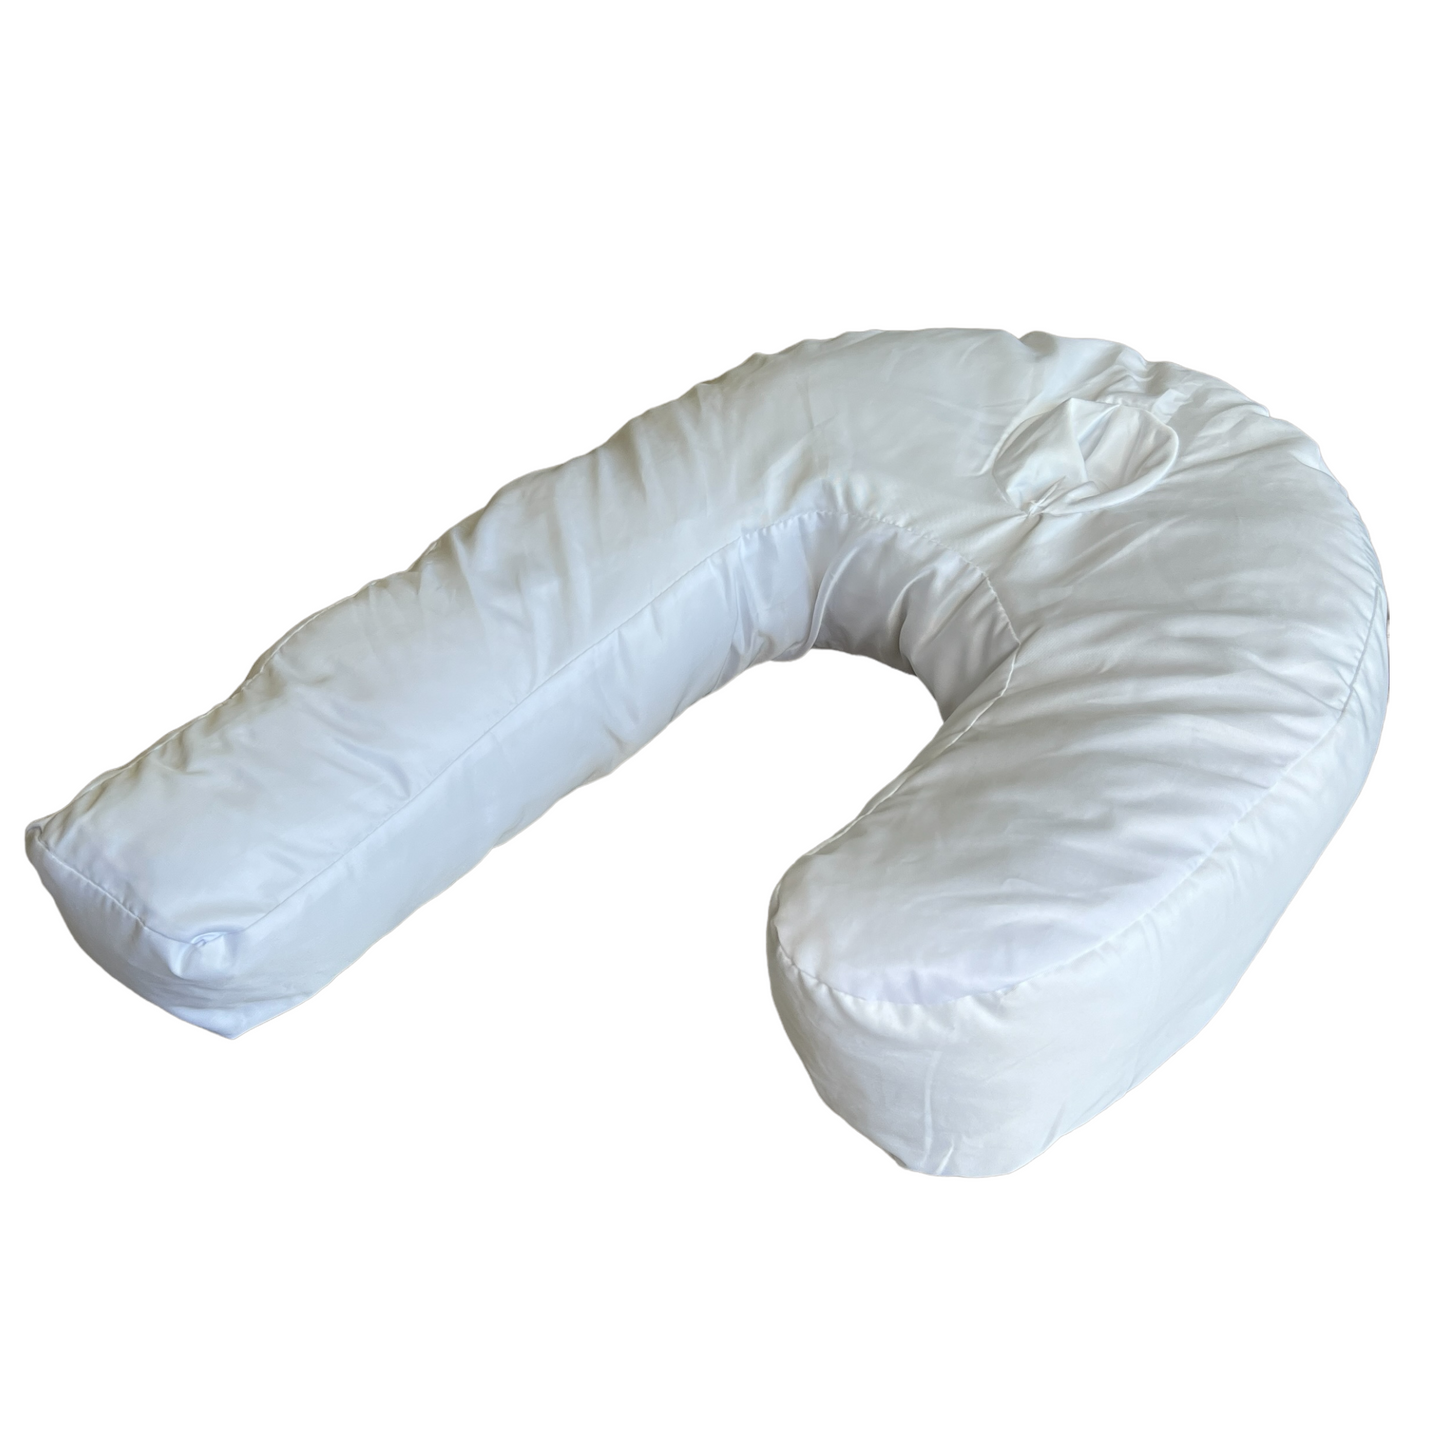 Newest U-Shaped Pillow Plus Side Sleeper